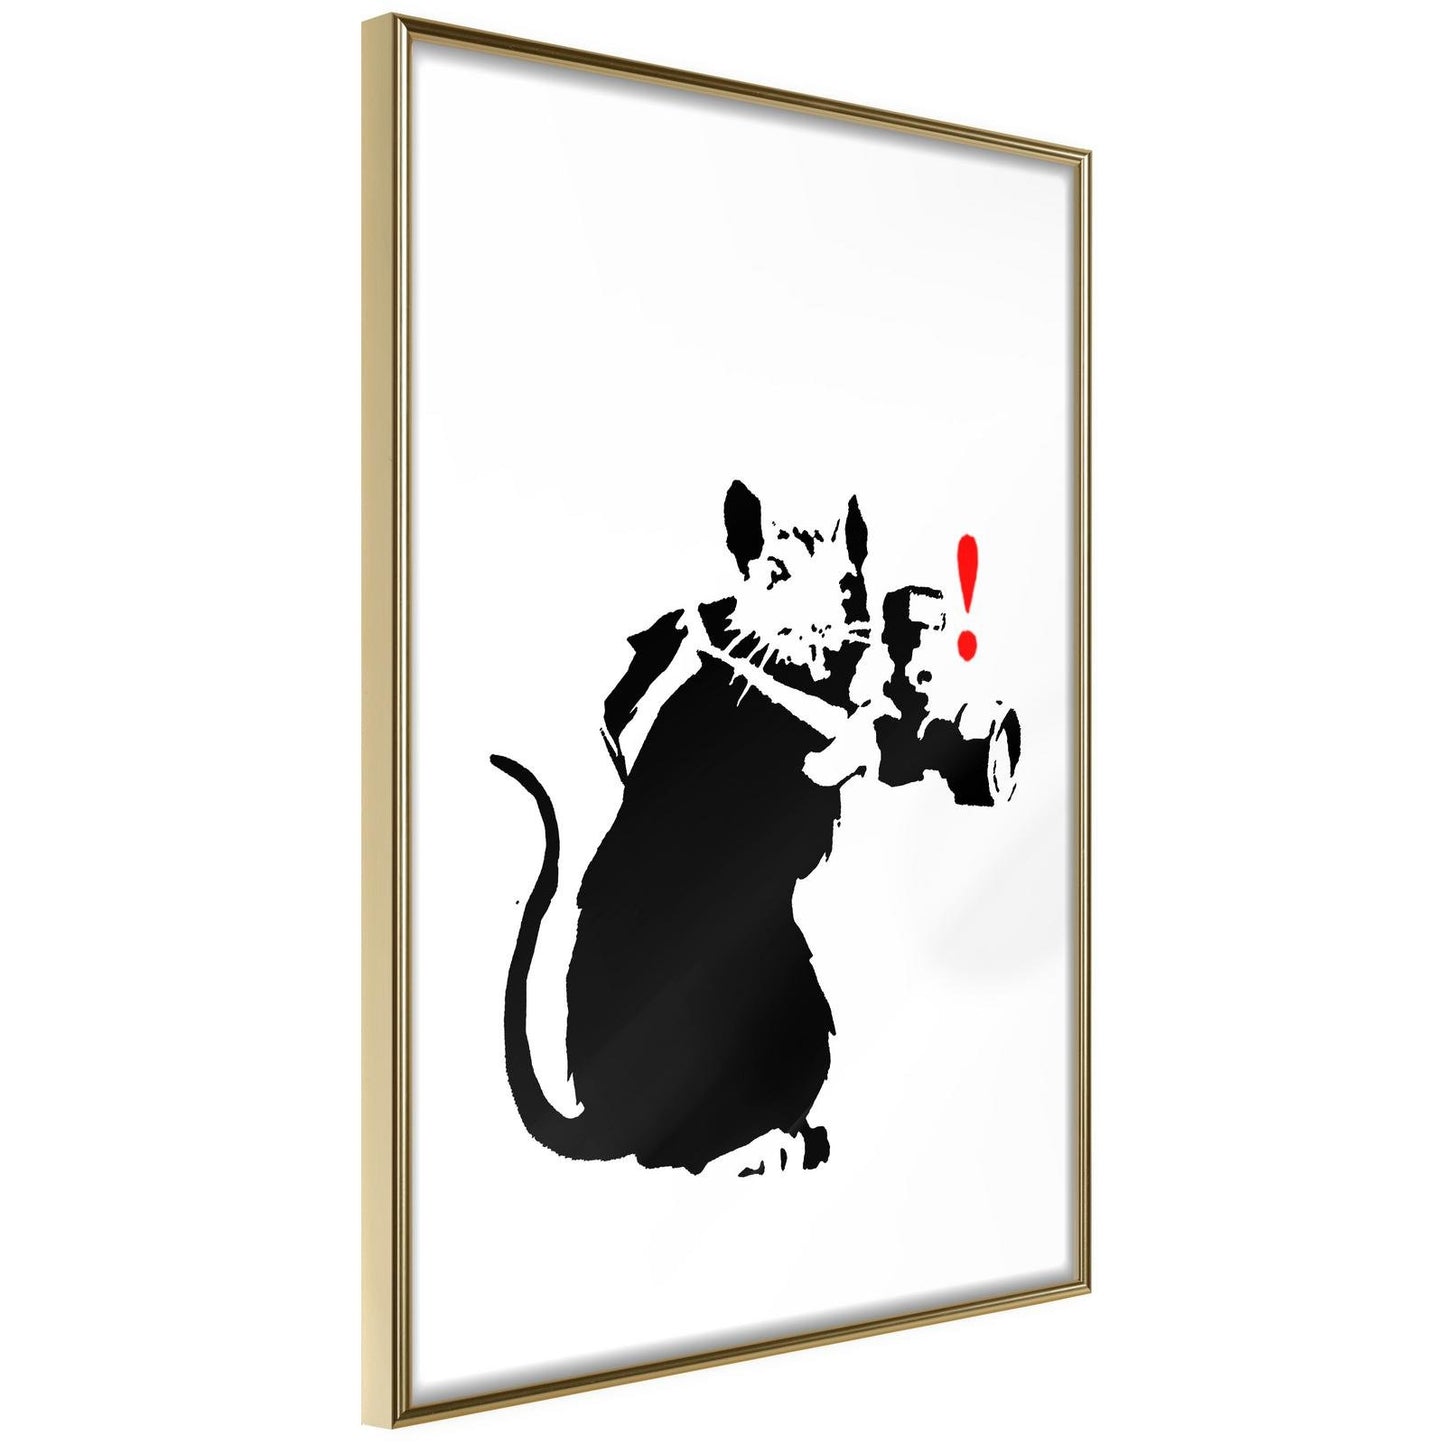 Banksy: Rat Photographer